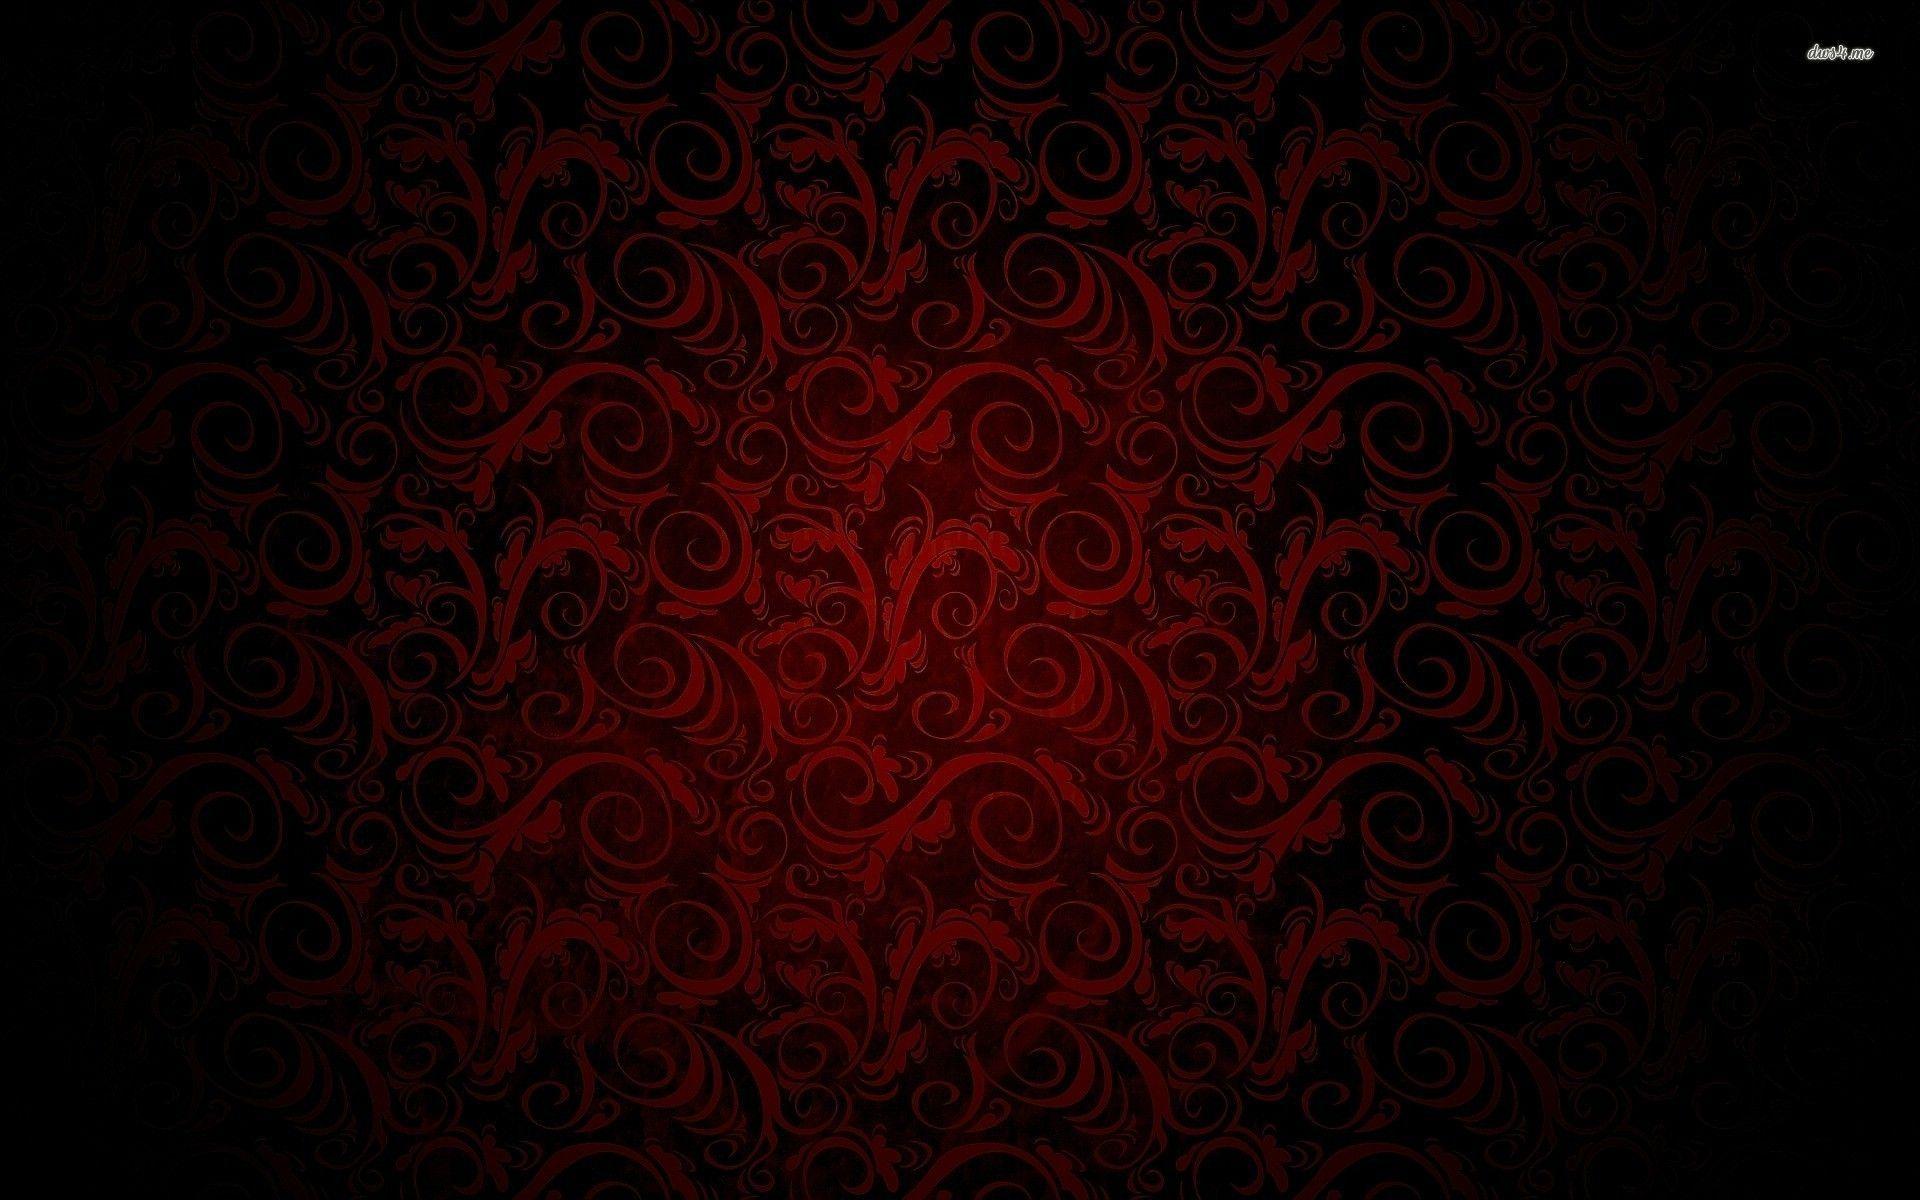 iPhoneXpaperscom  iPhone X wallpaper  vy78circleredsimpleminimal patternbackground